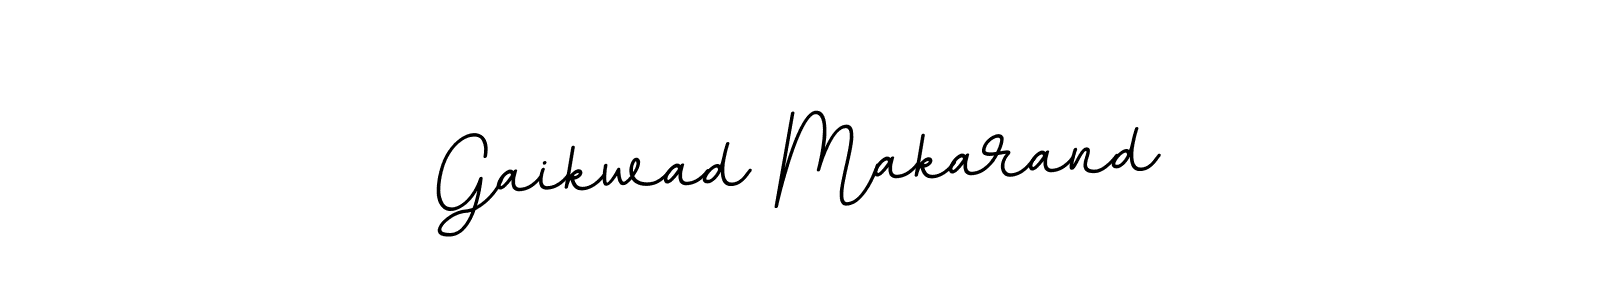 How to Draw Gaikwad Makarand signature style? BallpointsItalic-DORy9 is a latest design signature styles for name Gaikwad Makarand. Gaikwad Makarand signature style 11 images and pictures png